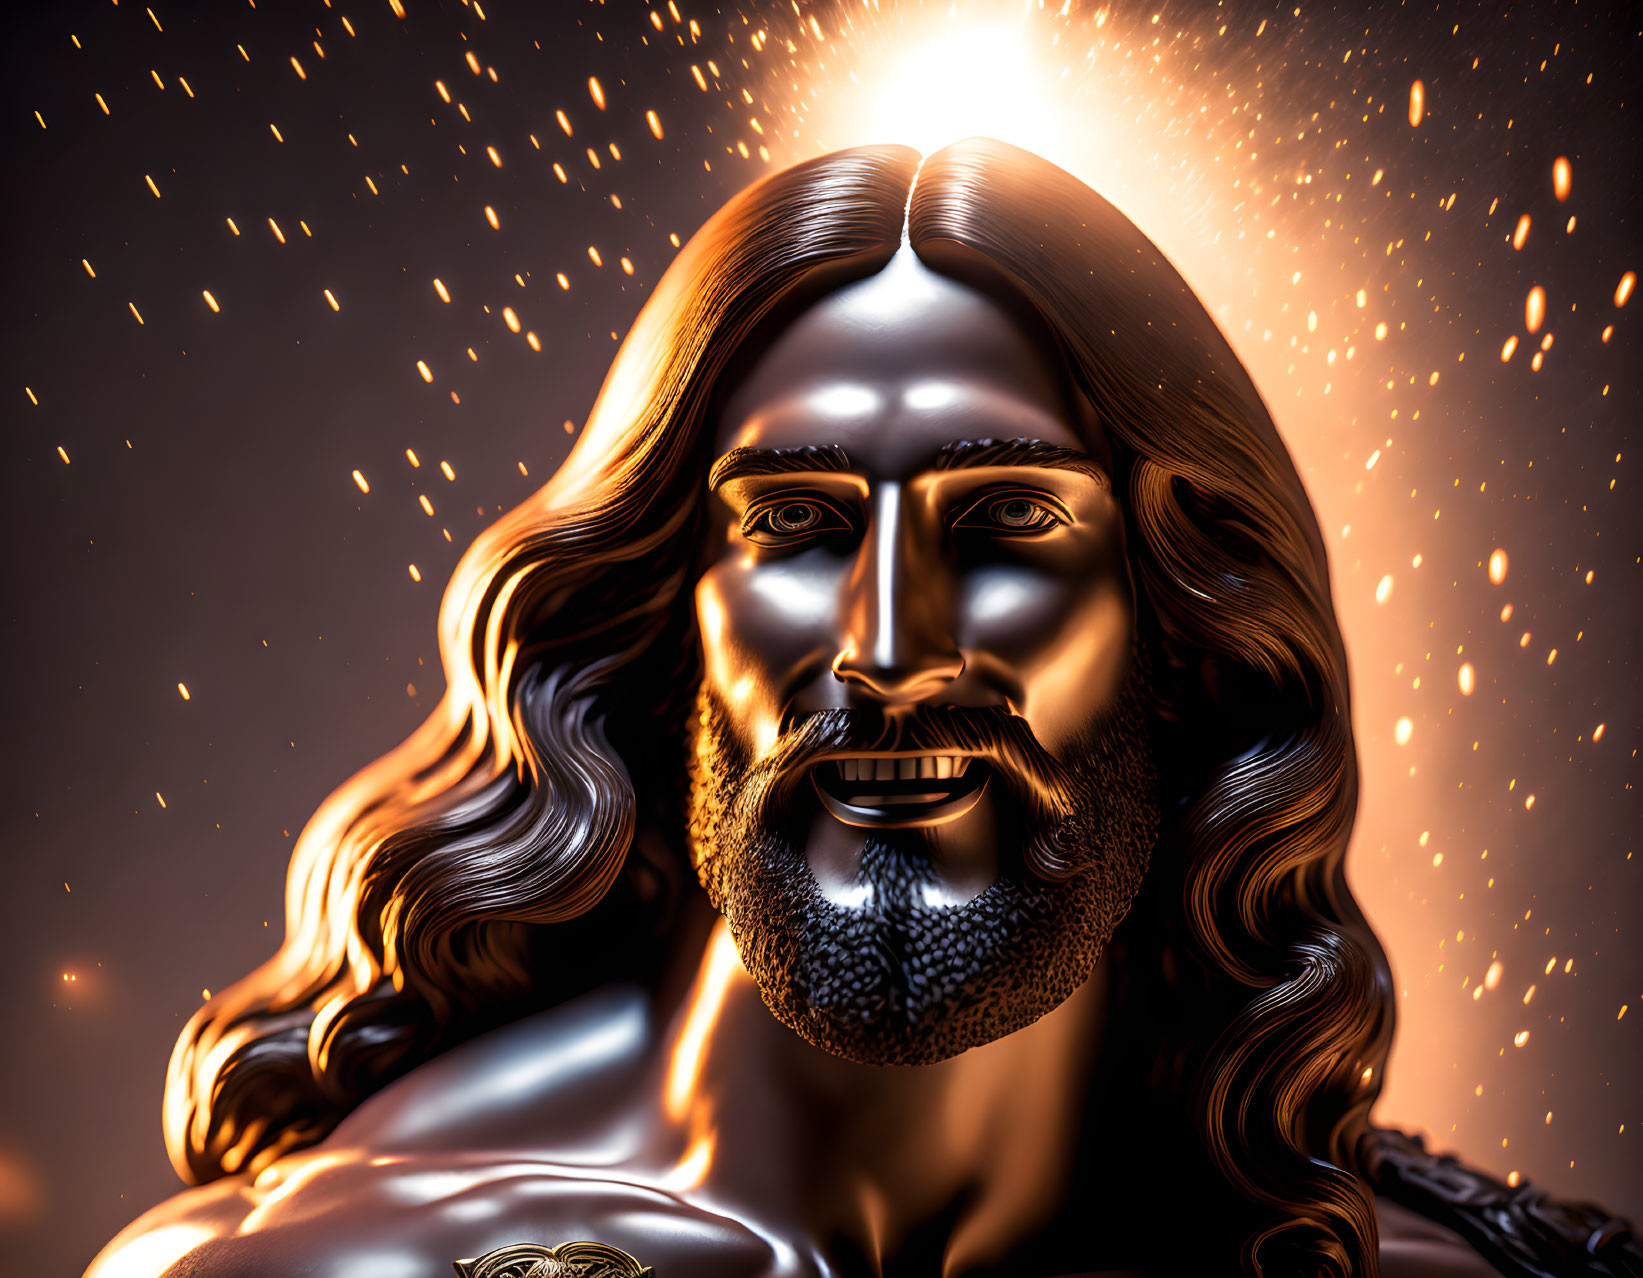 Glowing bronze figure with long hair and beard in digital art